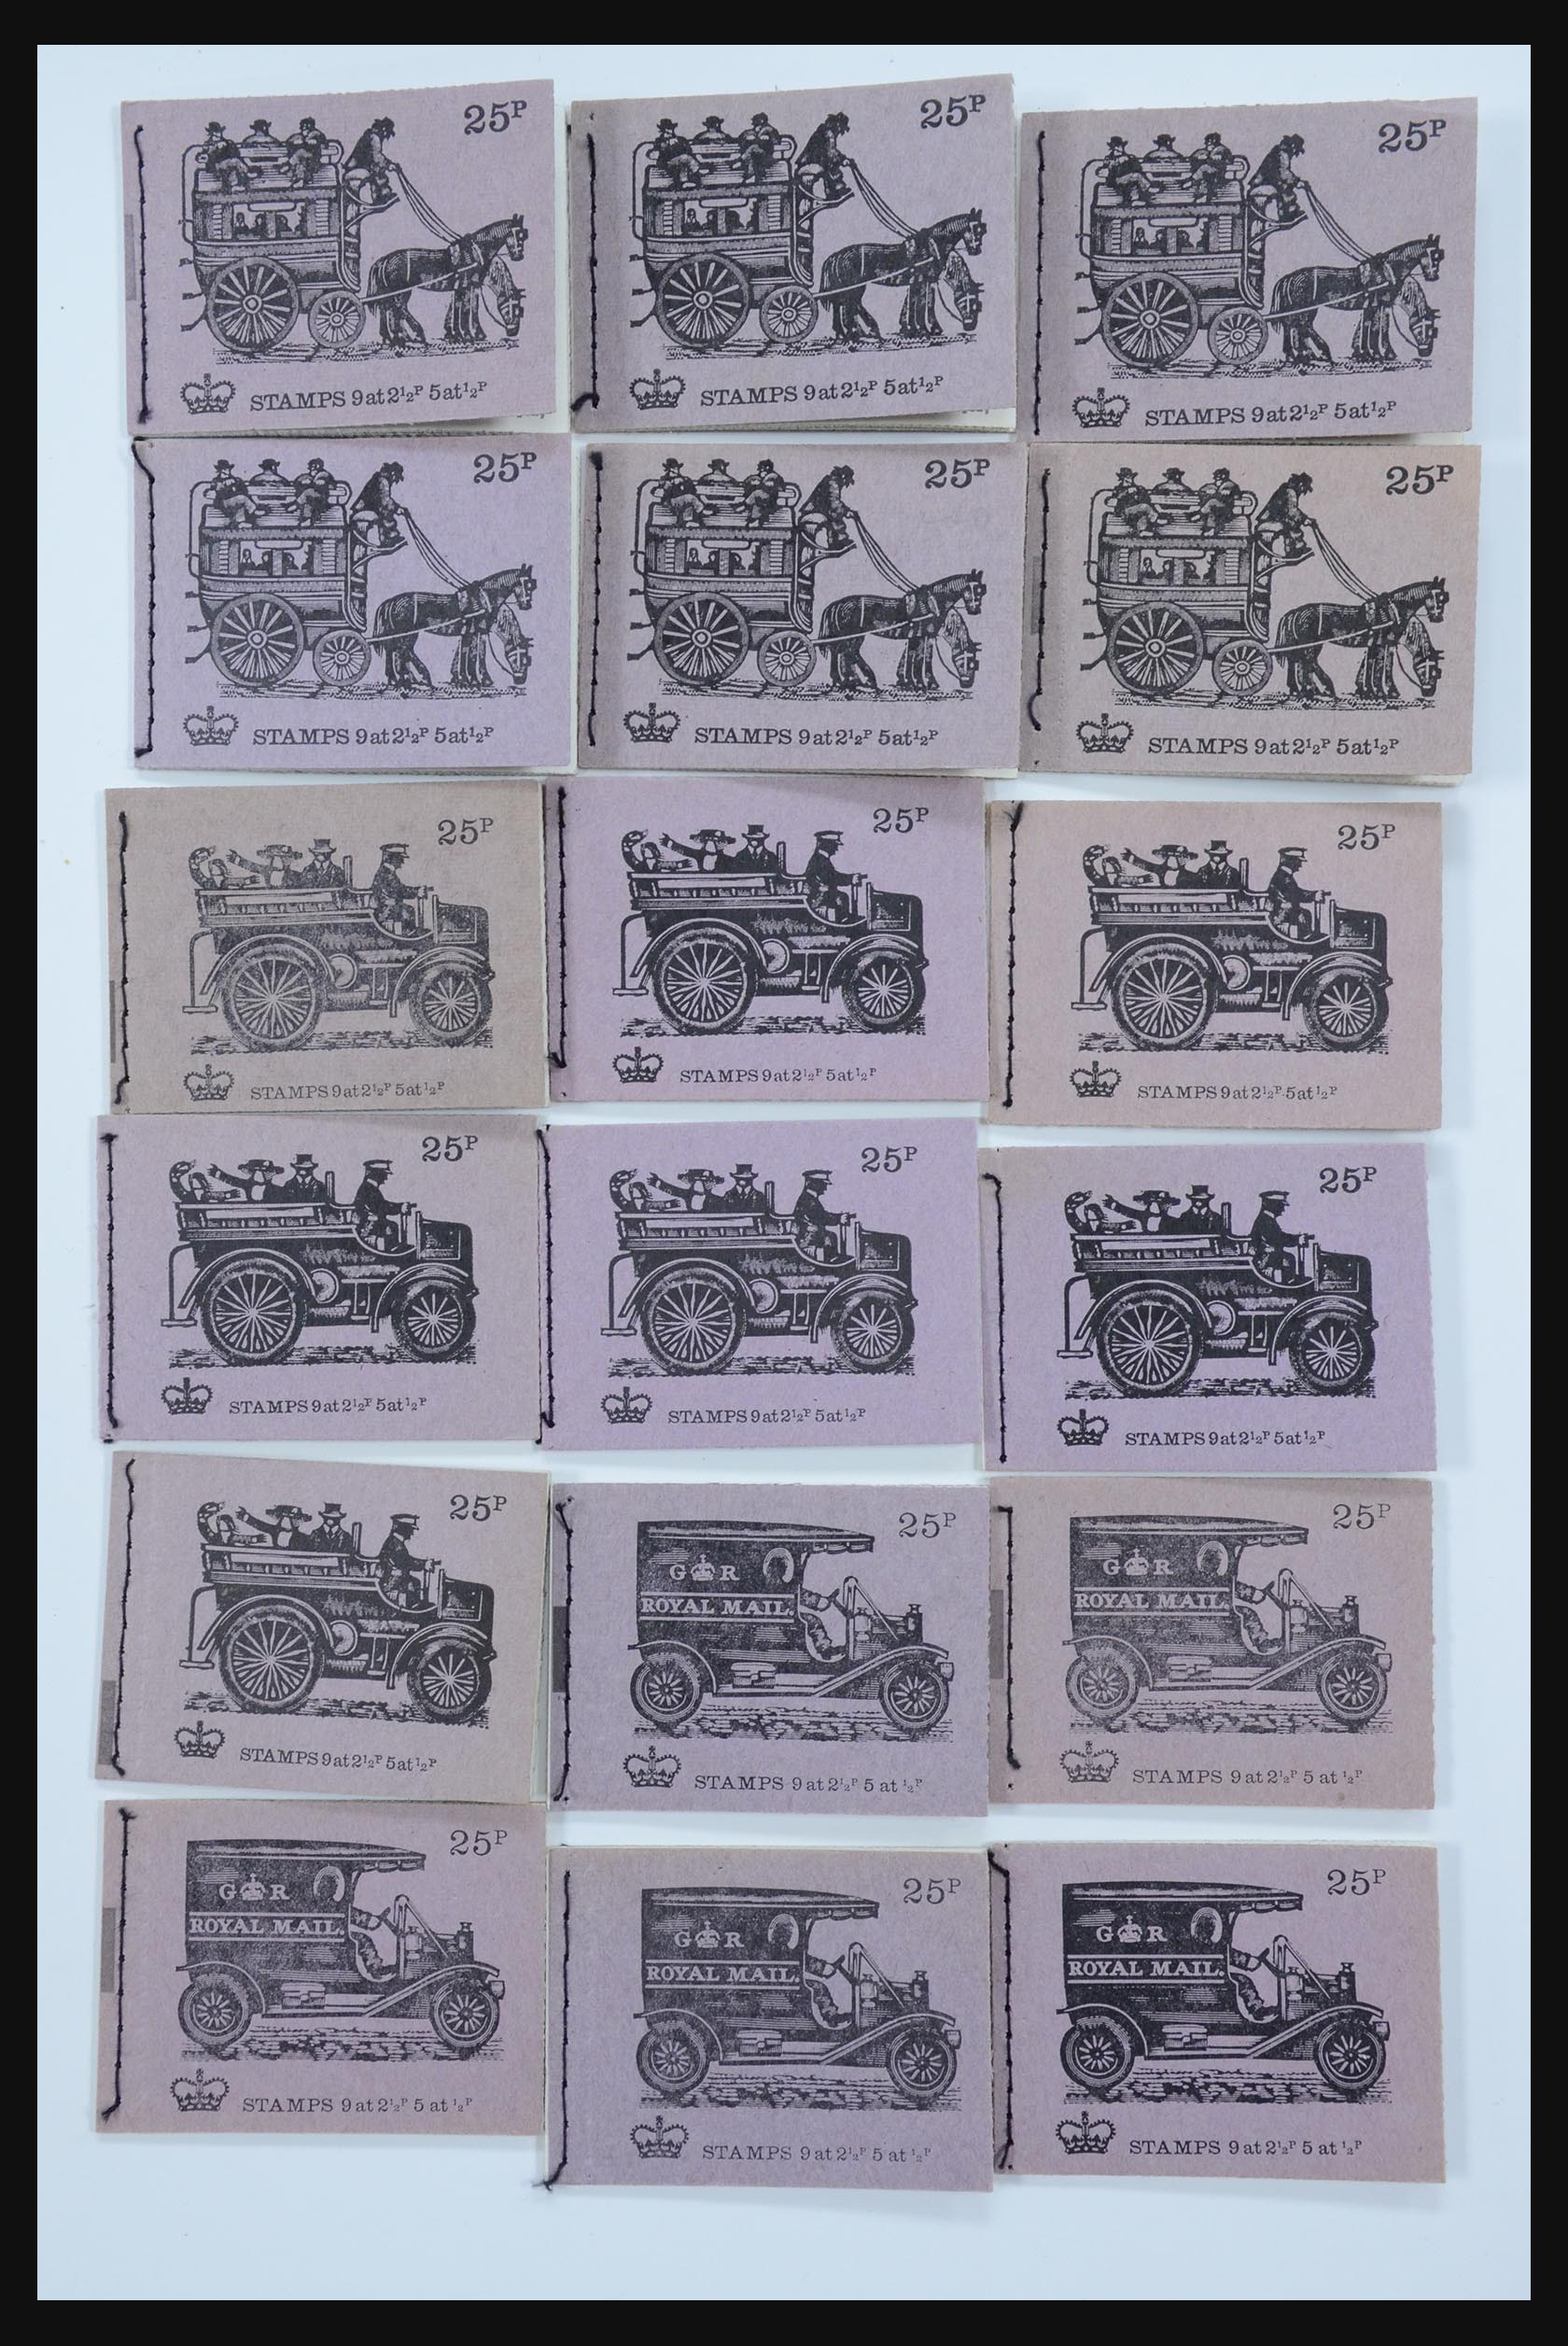 31961 011 - 31961 Great Britain stampbooklets 1971-1999.